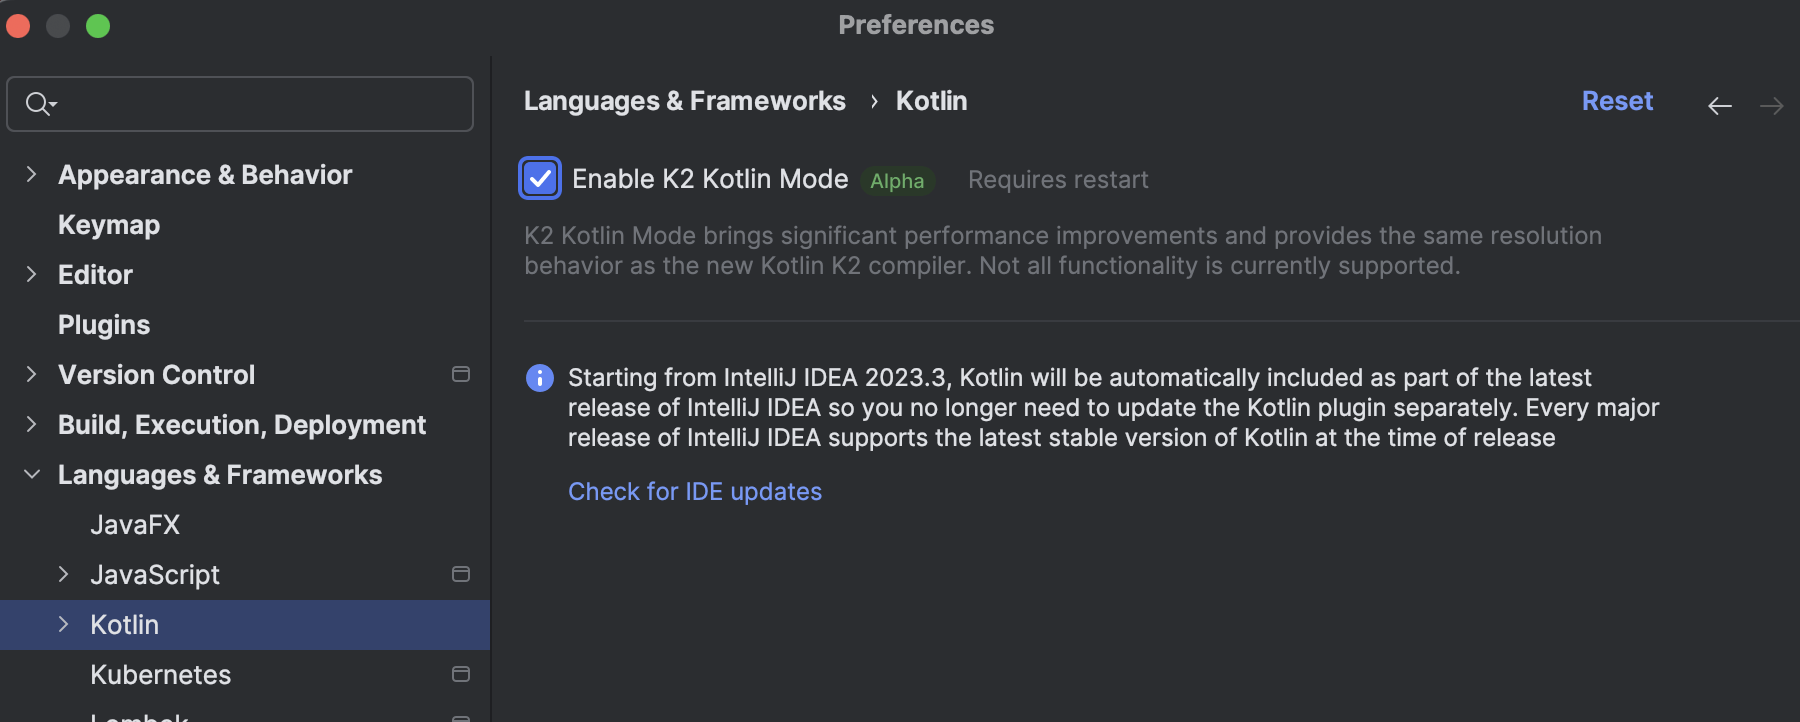 K2 Kotlin 模式 Alpha